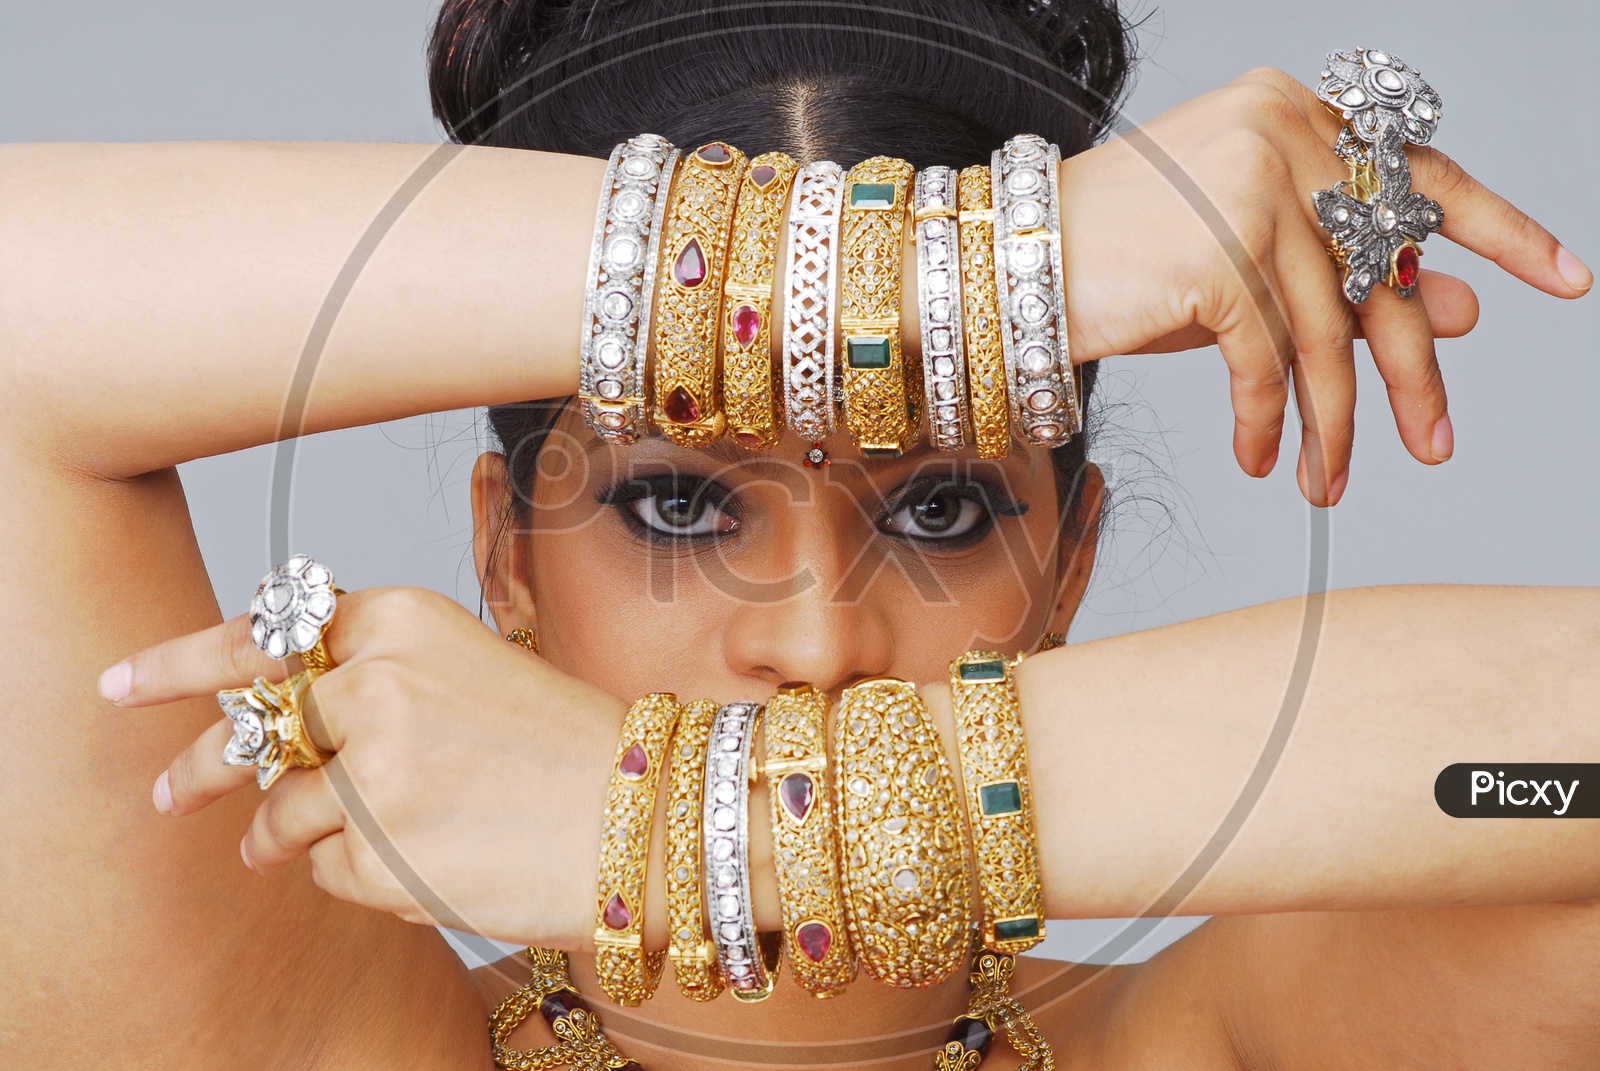 Indian woman wearing bangles